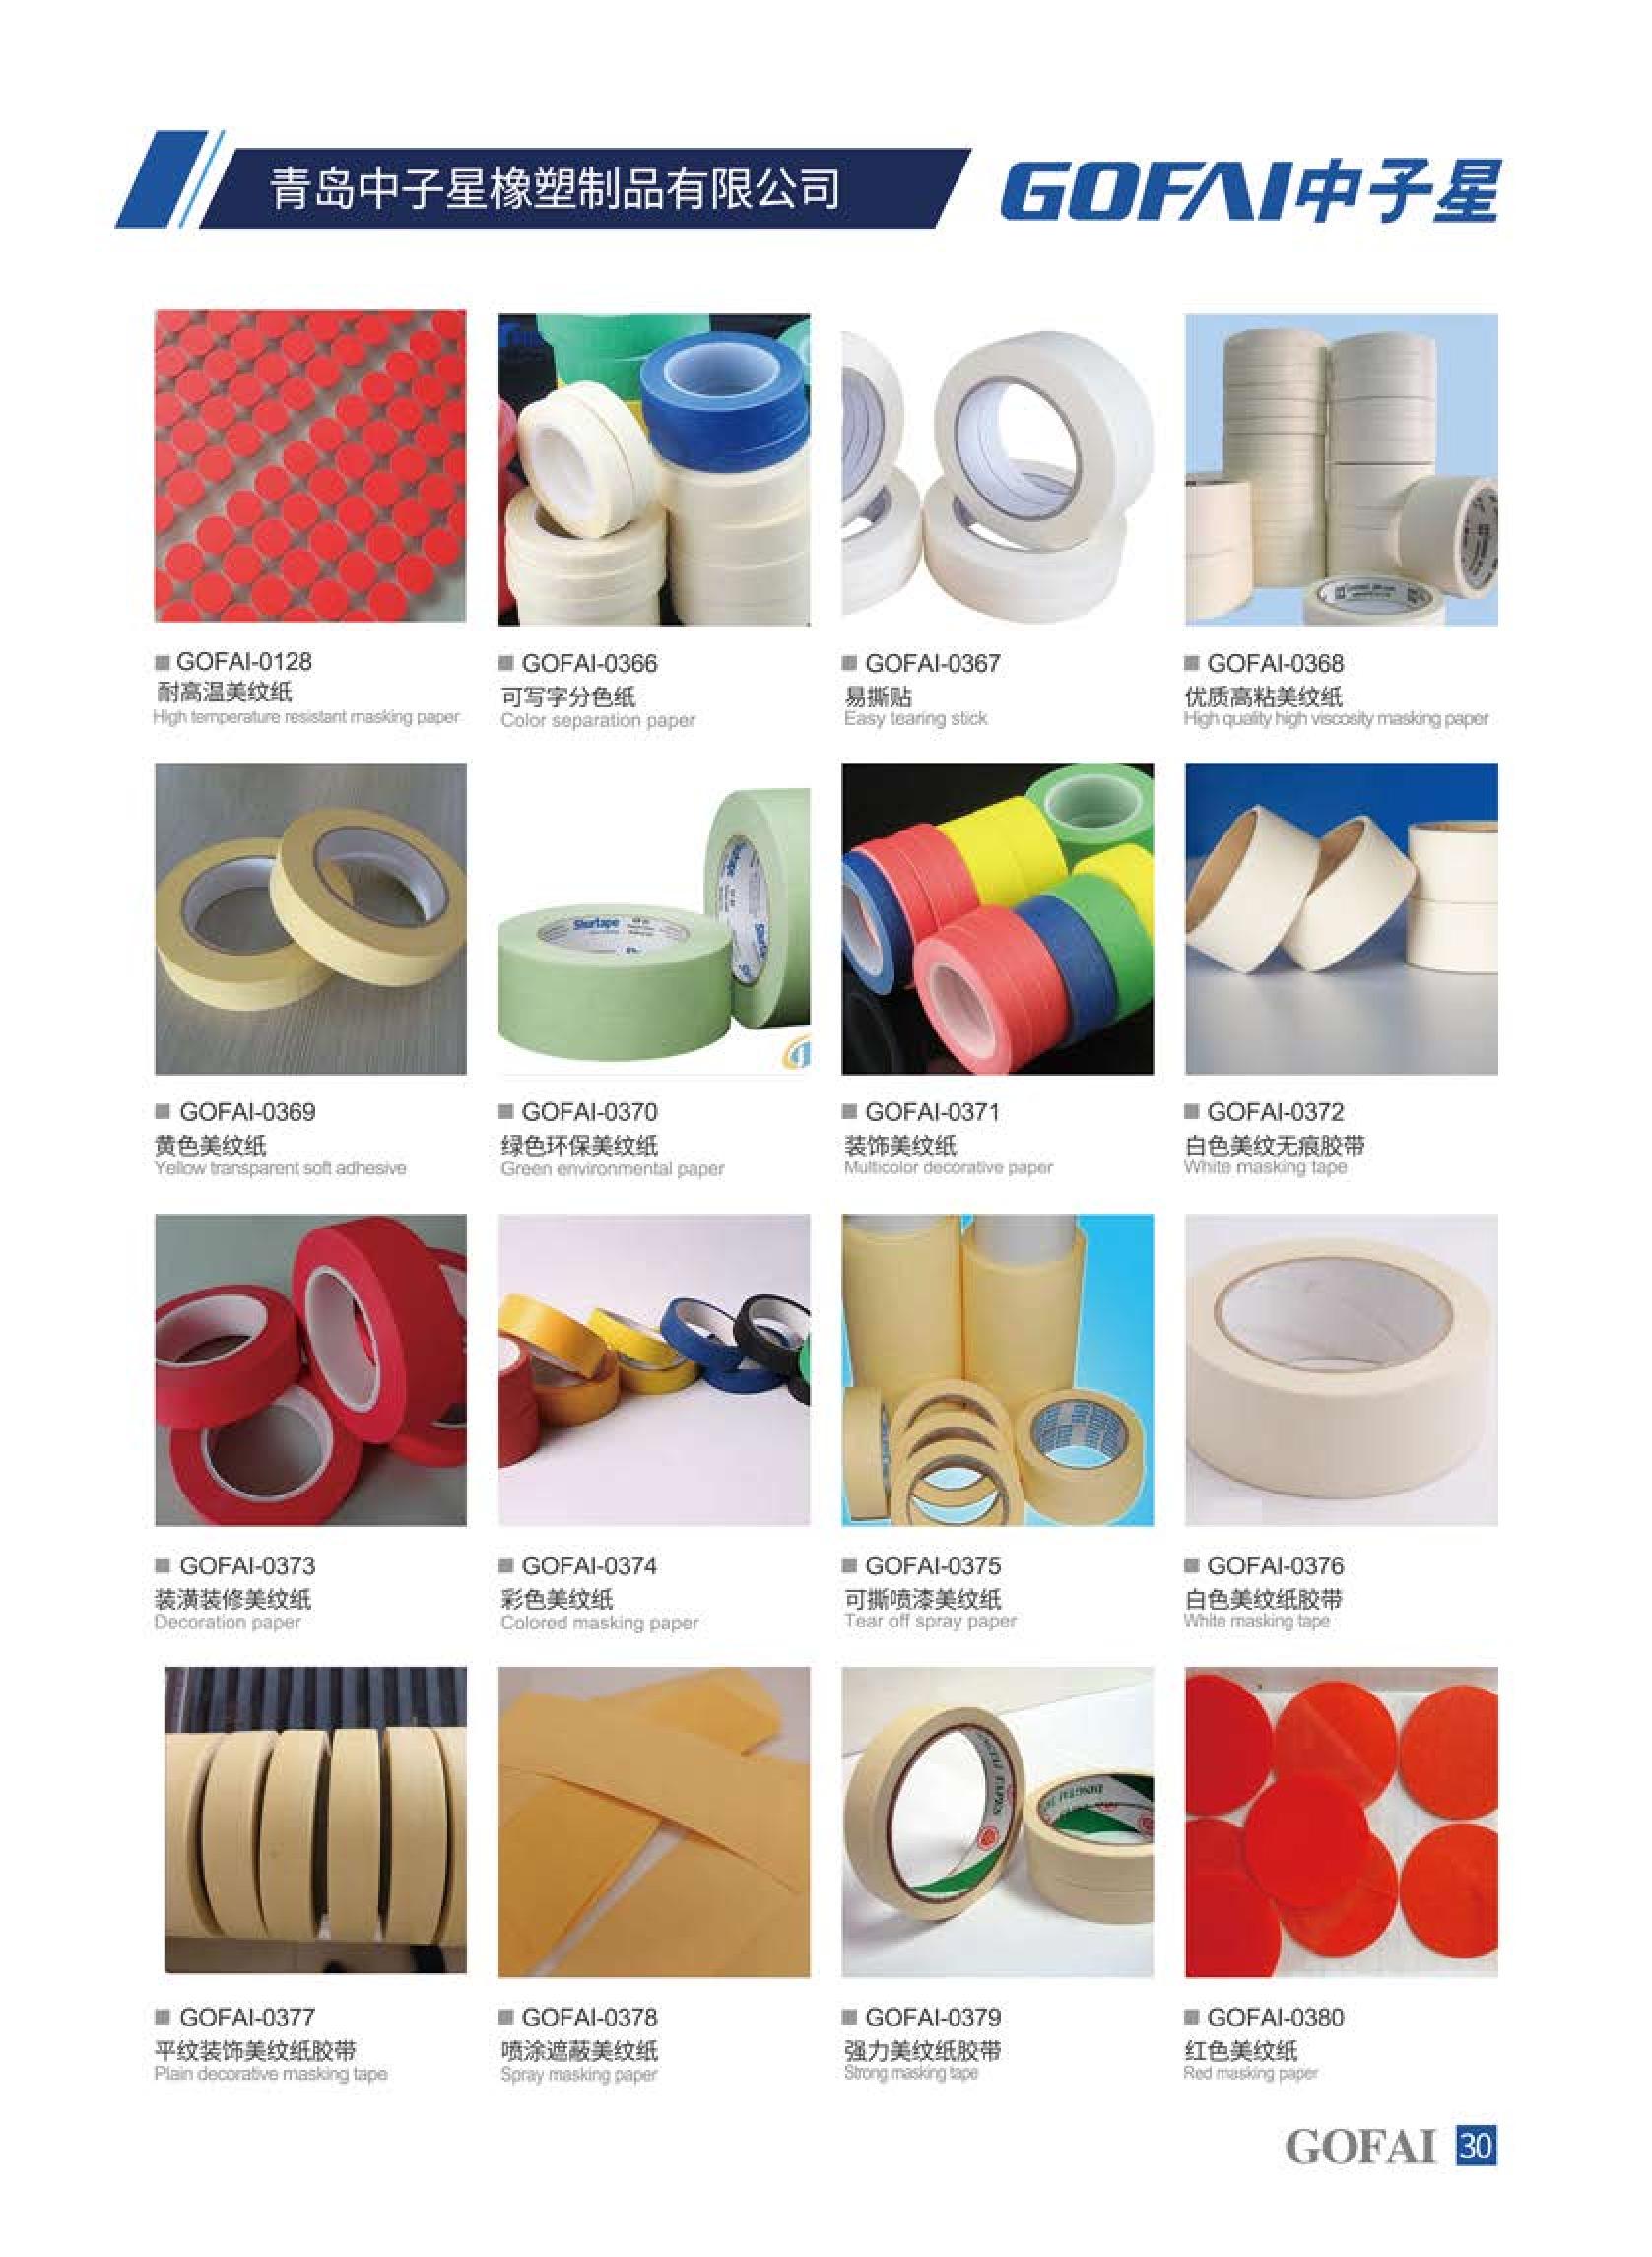 GOFAI self adhesive rubber pad catalog_32.jpg